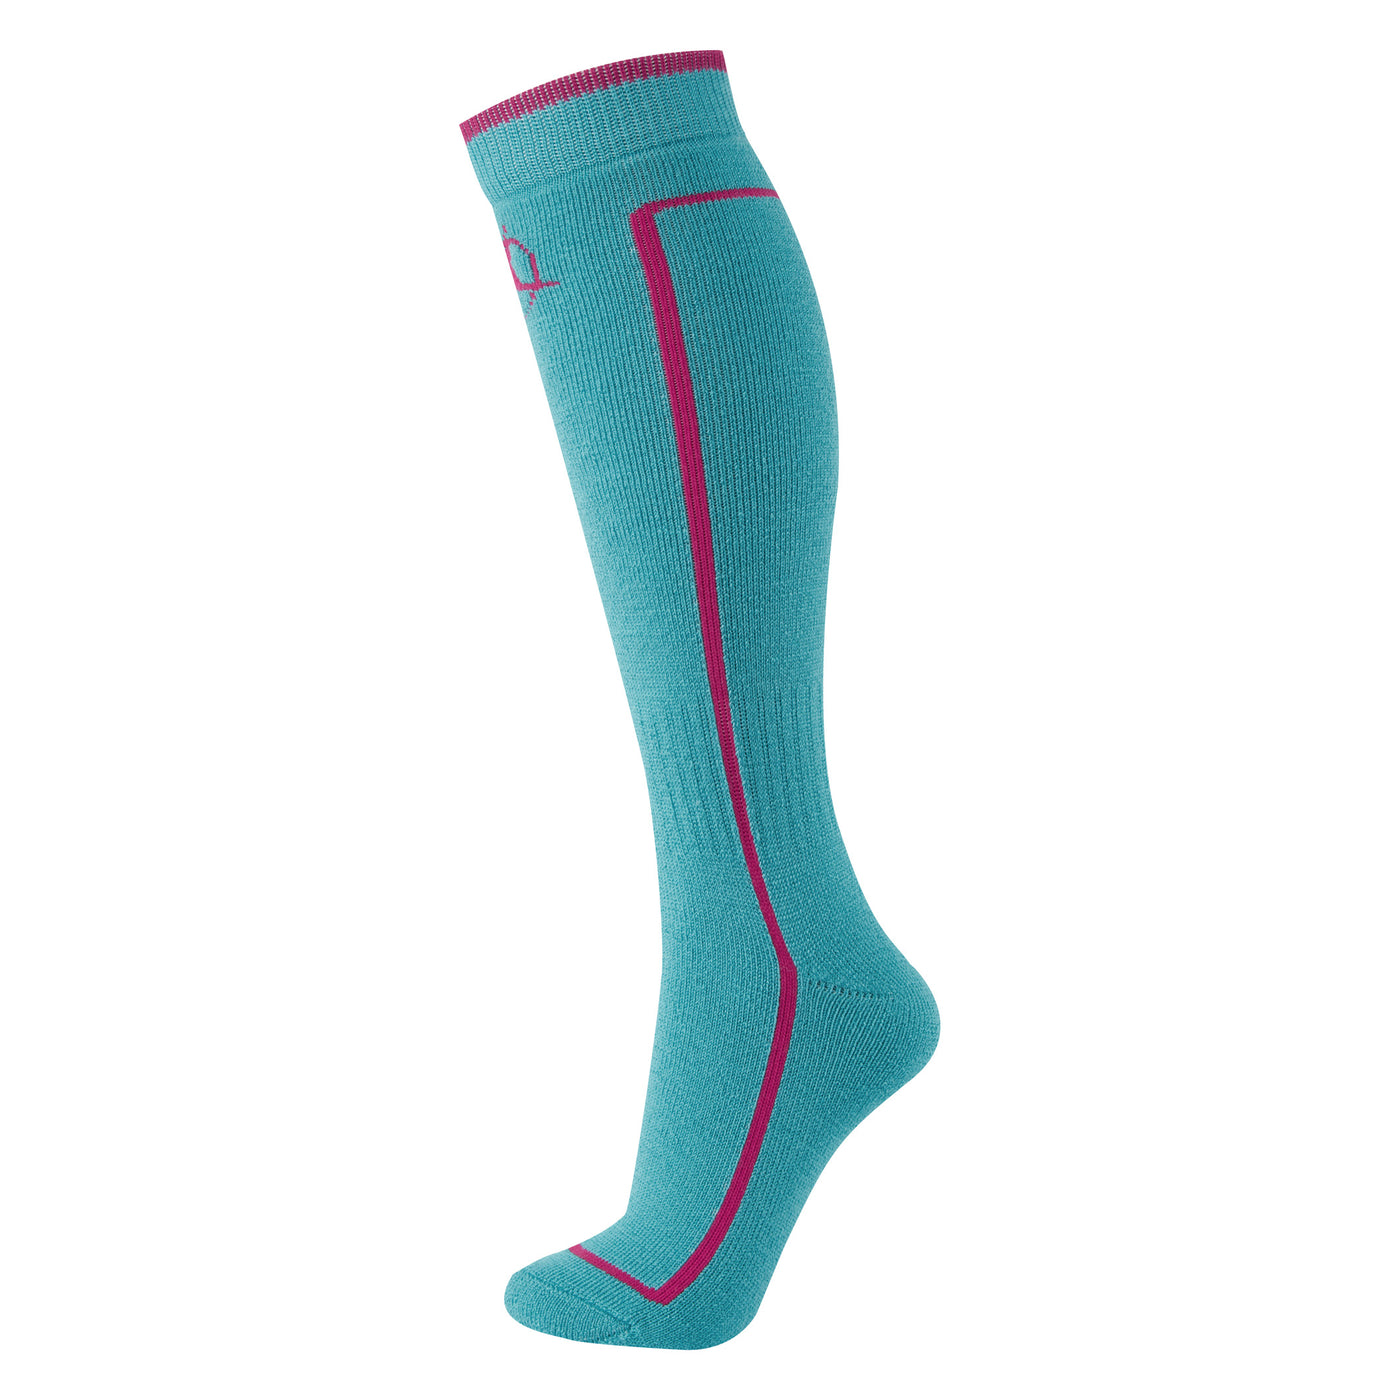 Manbi-PPP Performance Ski Sock Turquoise/Raspberry